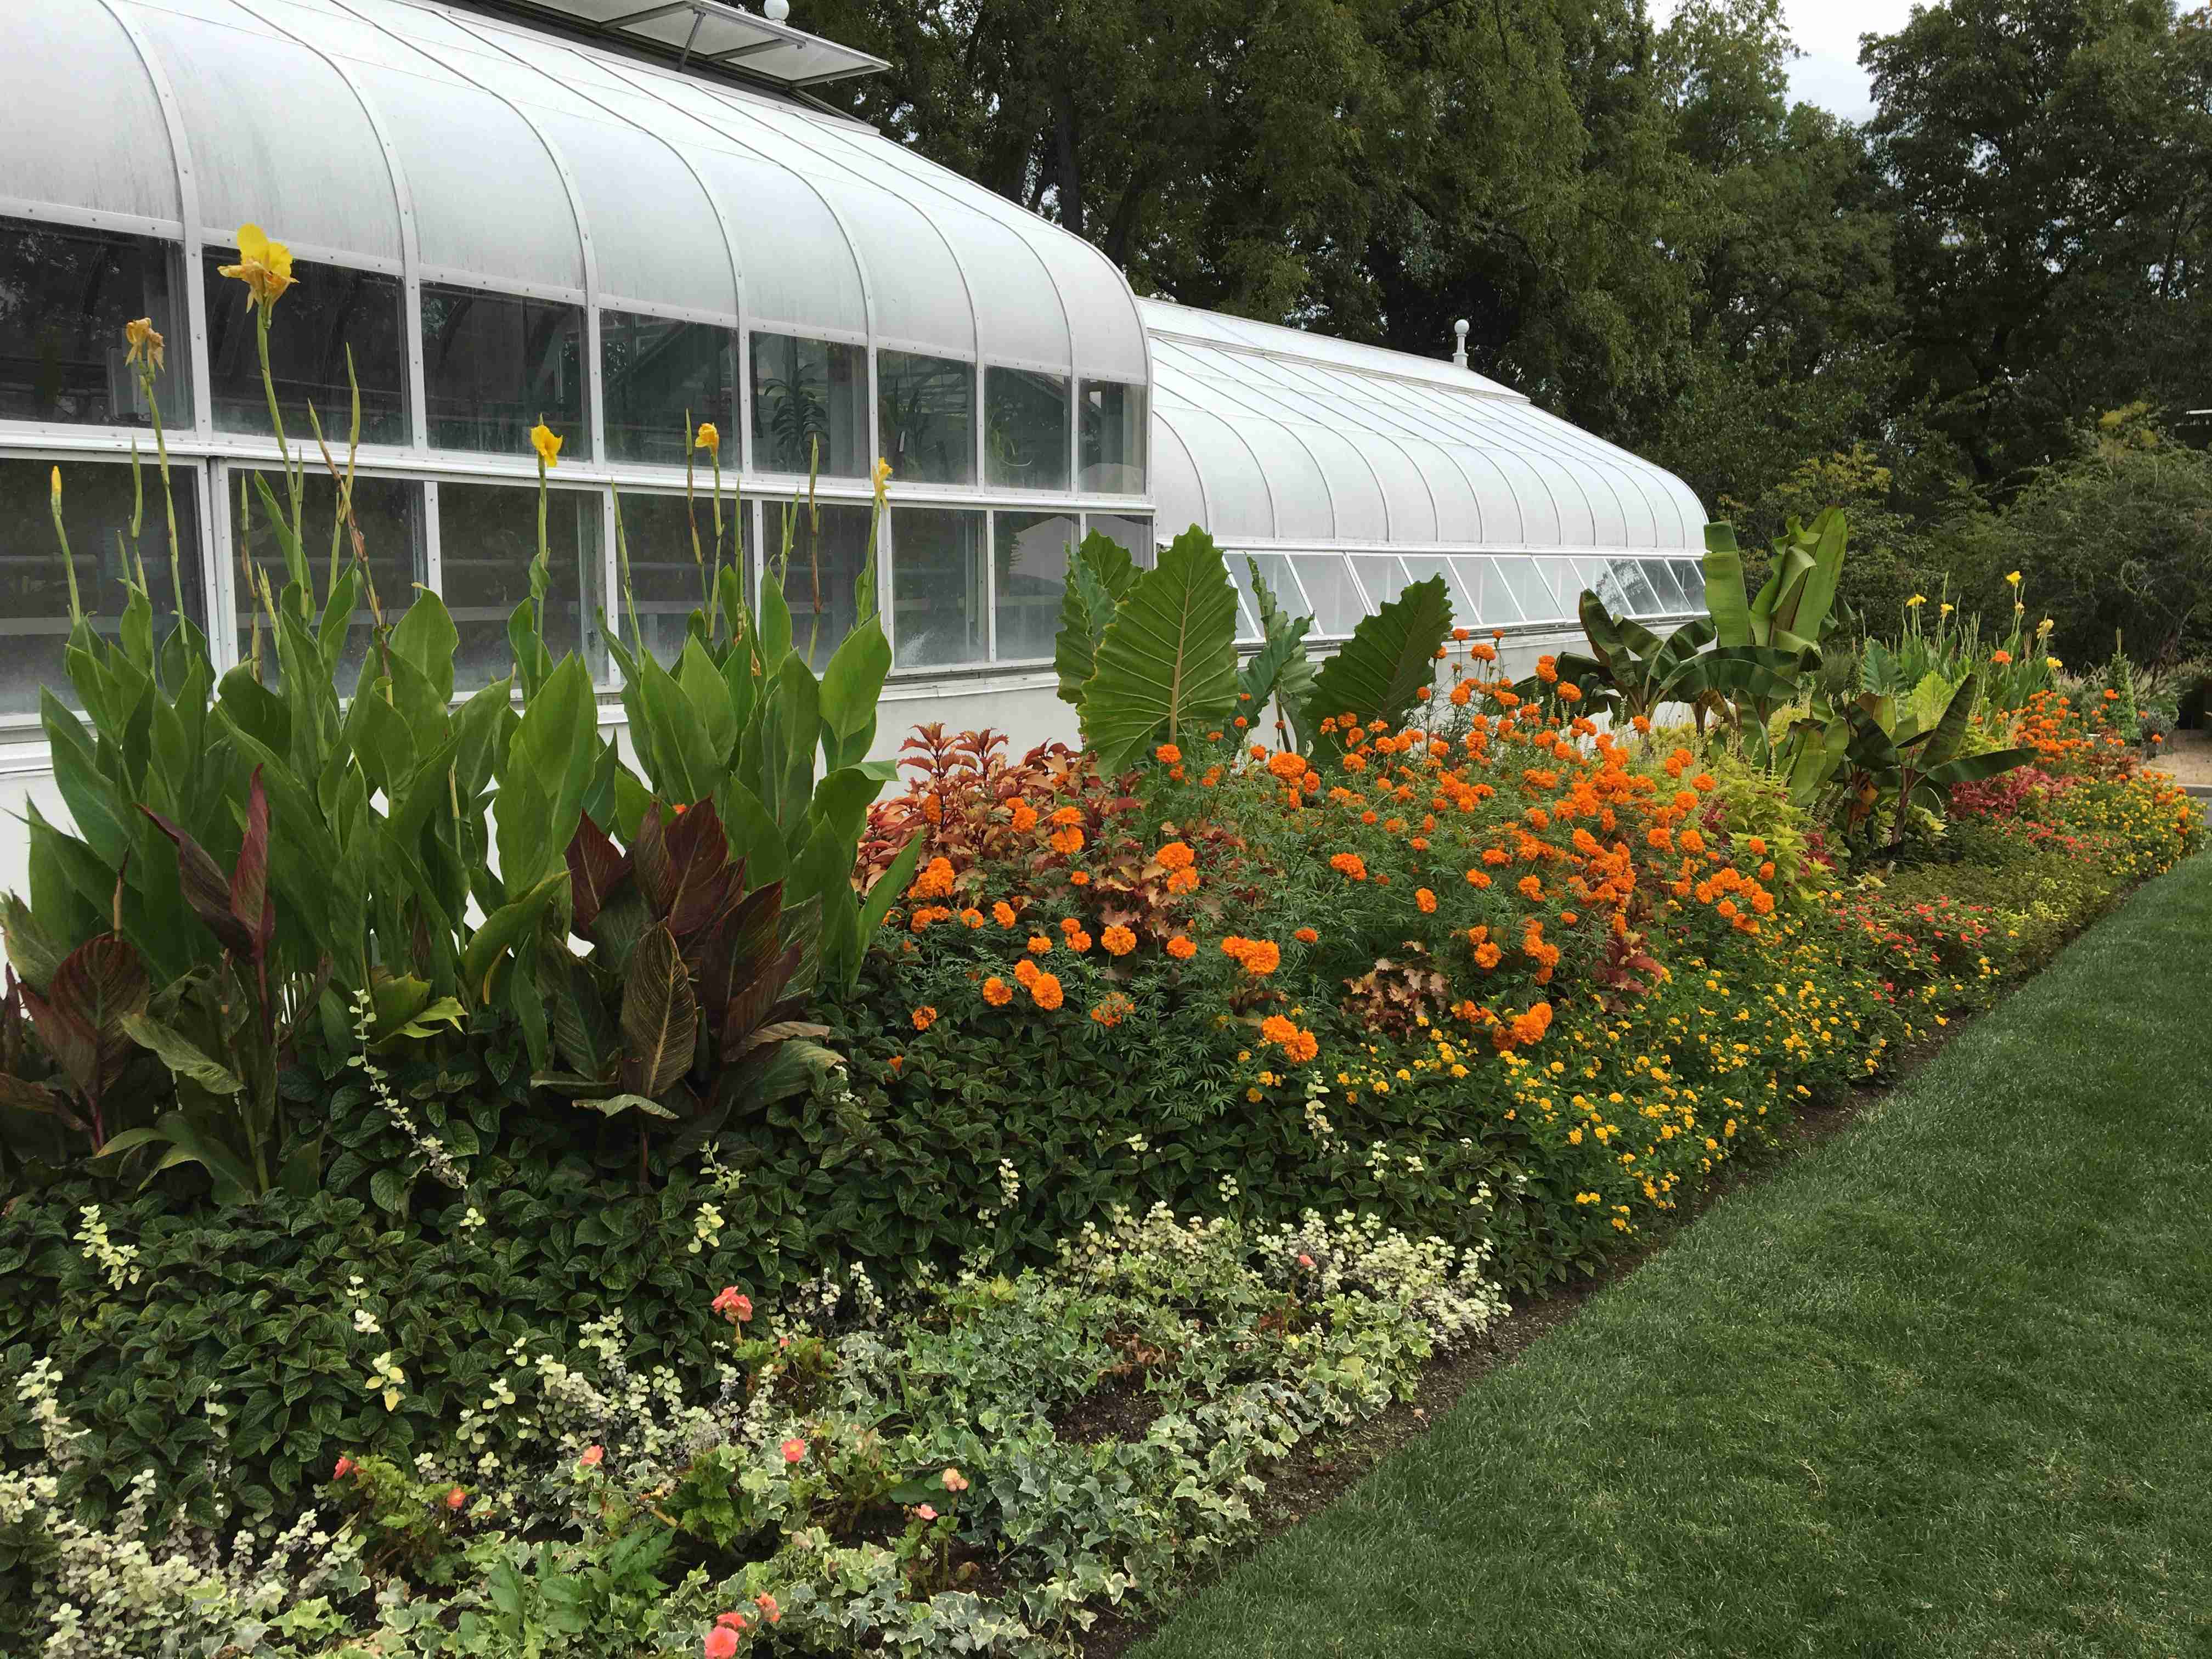 Greenhouse summer display tropical plants, orange mums, birds of paradise